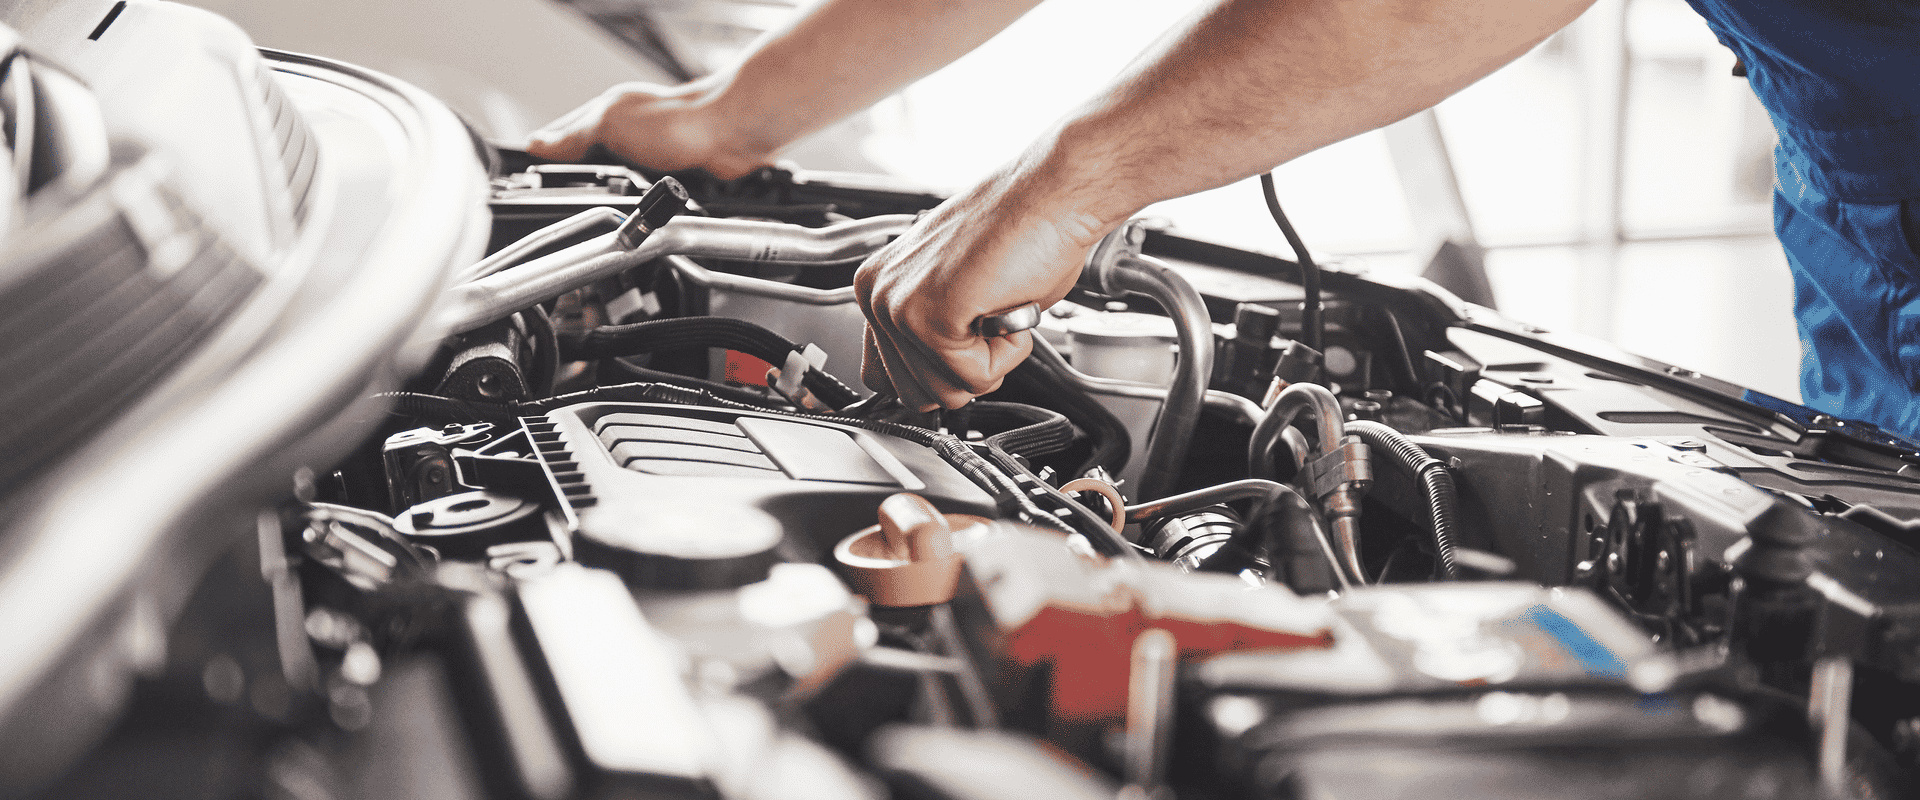 Signs Your Car Needs Maintenance or Repair